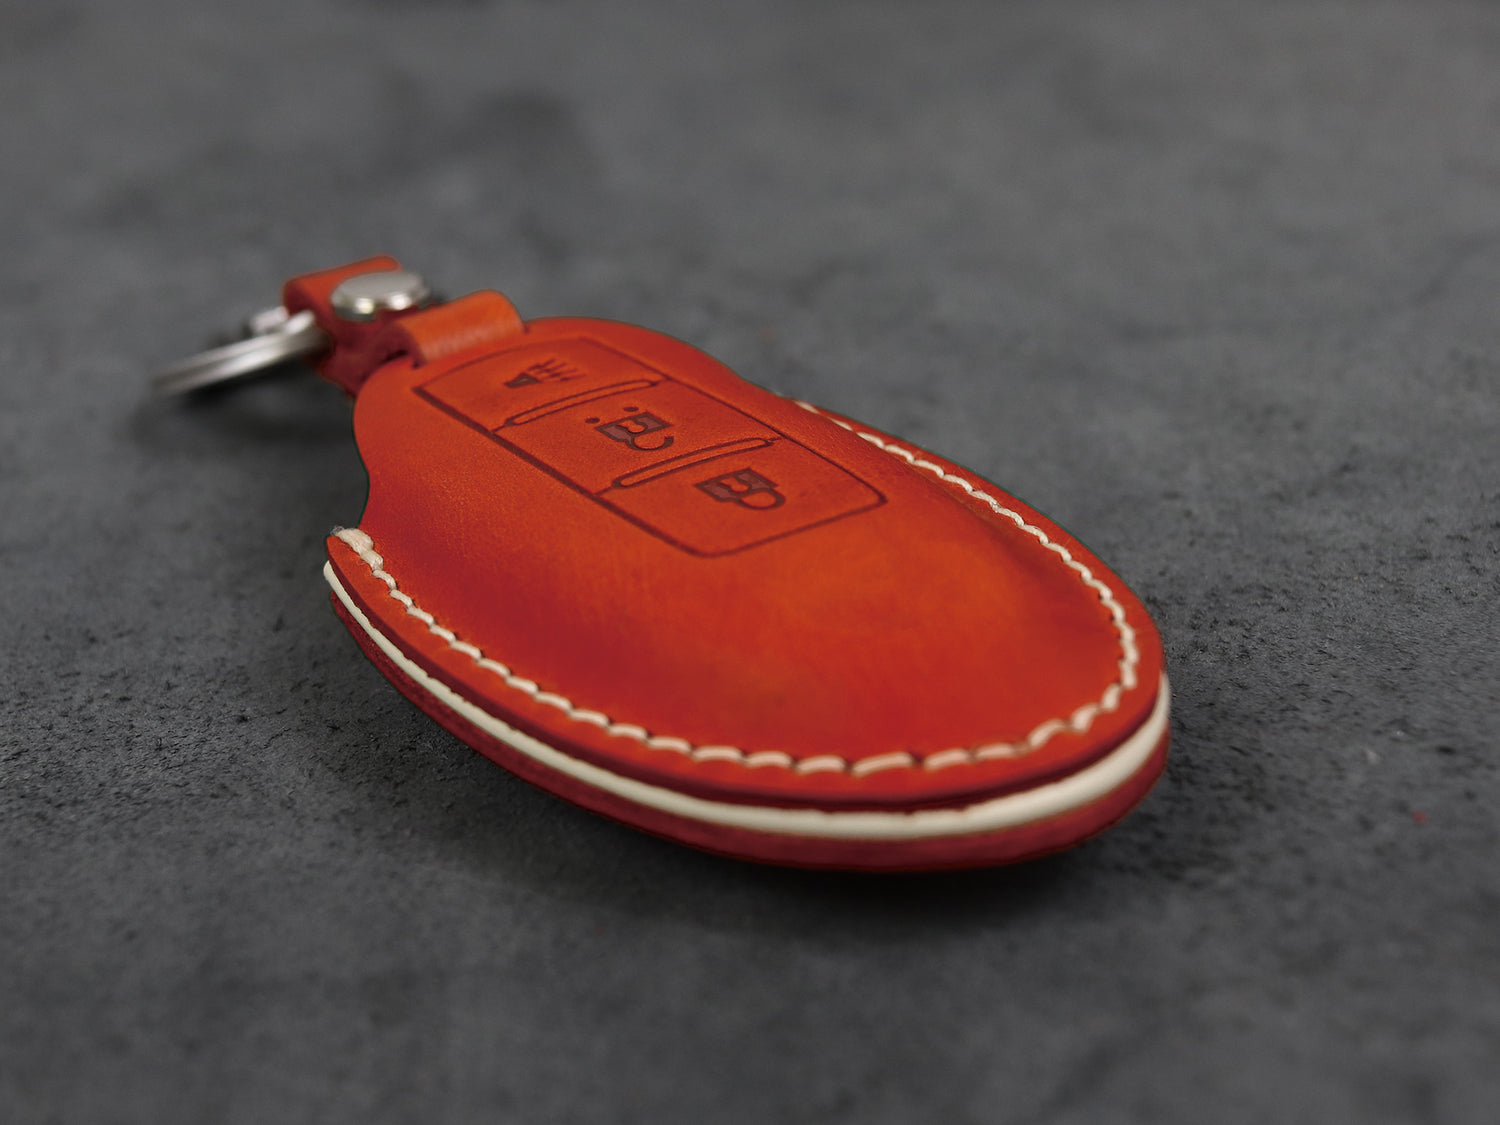 Infiniti Series [01-3B] Key Case  EX35 FX35 FX45 FX50 G25 Leather Brut Key Case, Car Key Accessories New Car Gift